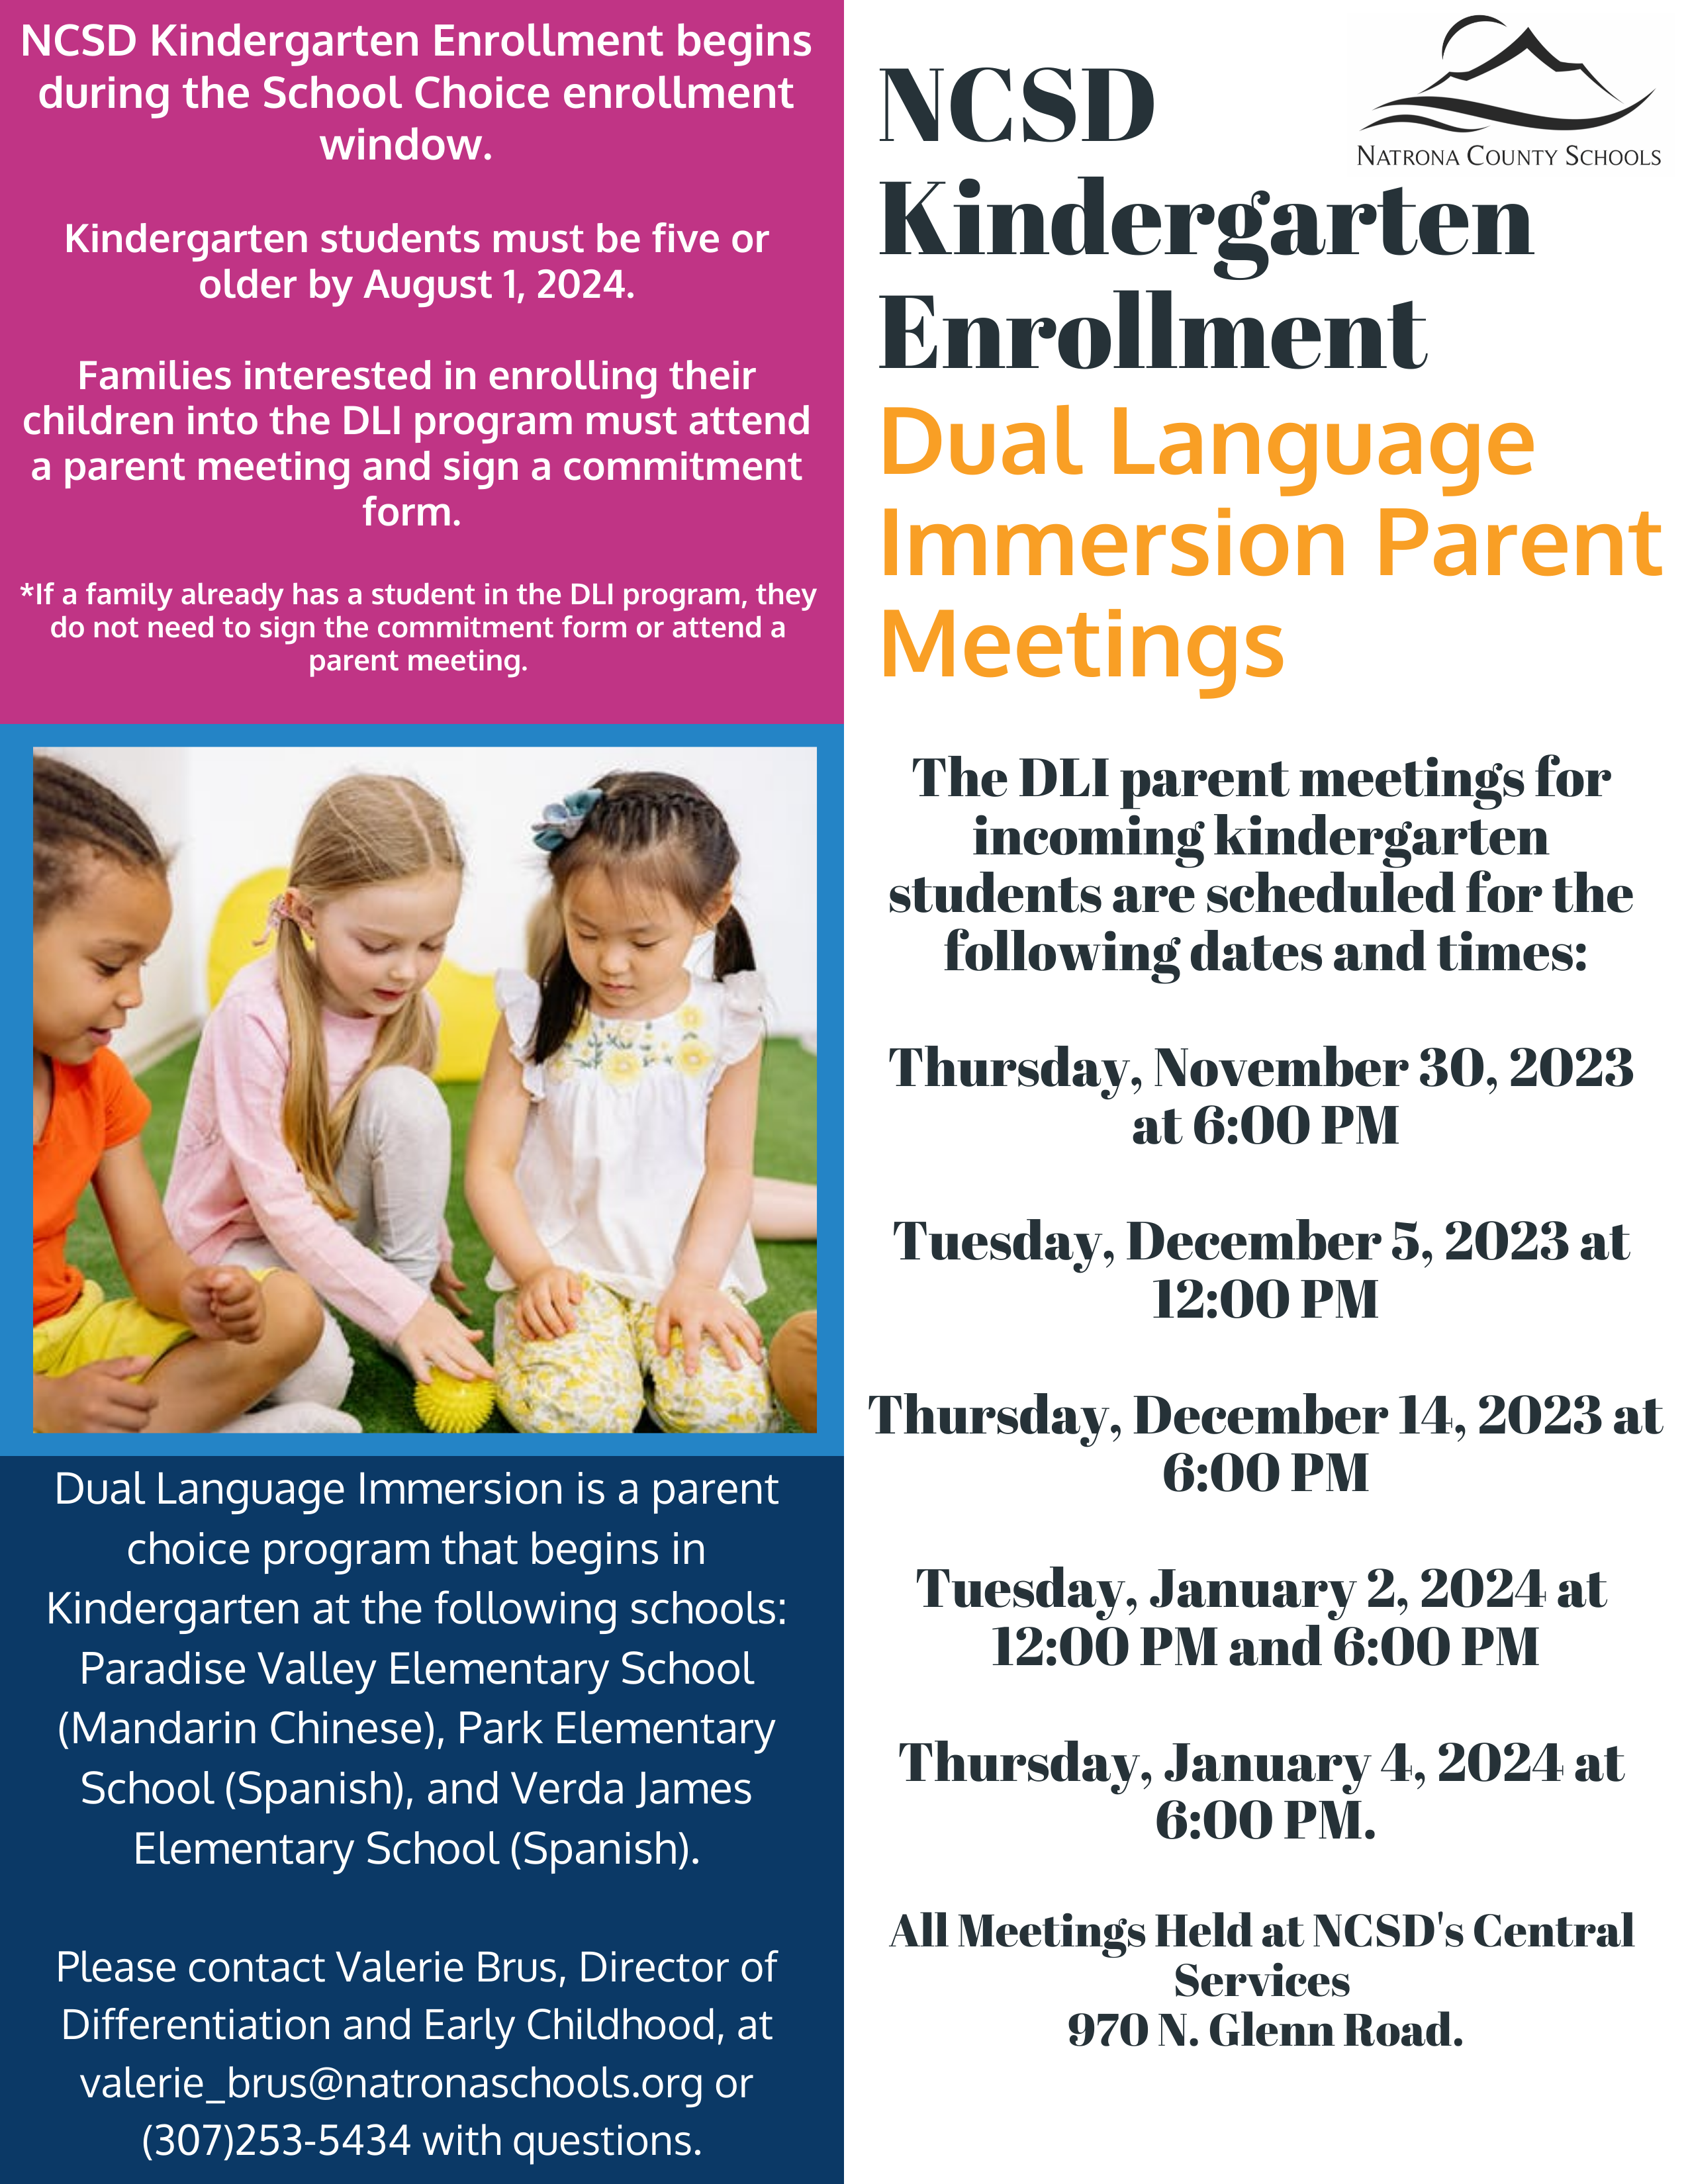 NCSD Kindergarten Enrollment Dula Language Immersion Parent Meetings flyer